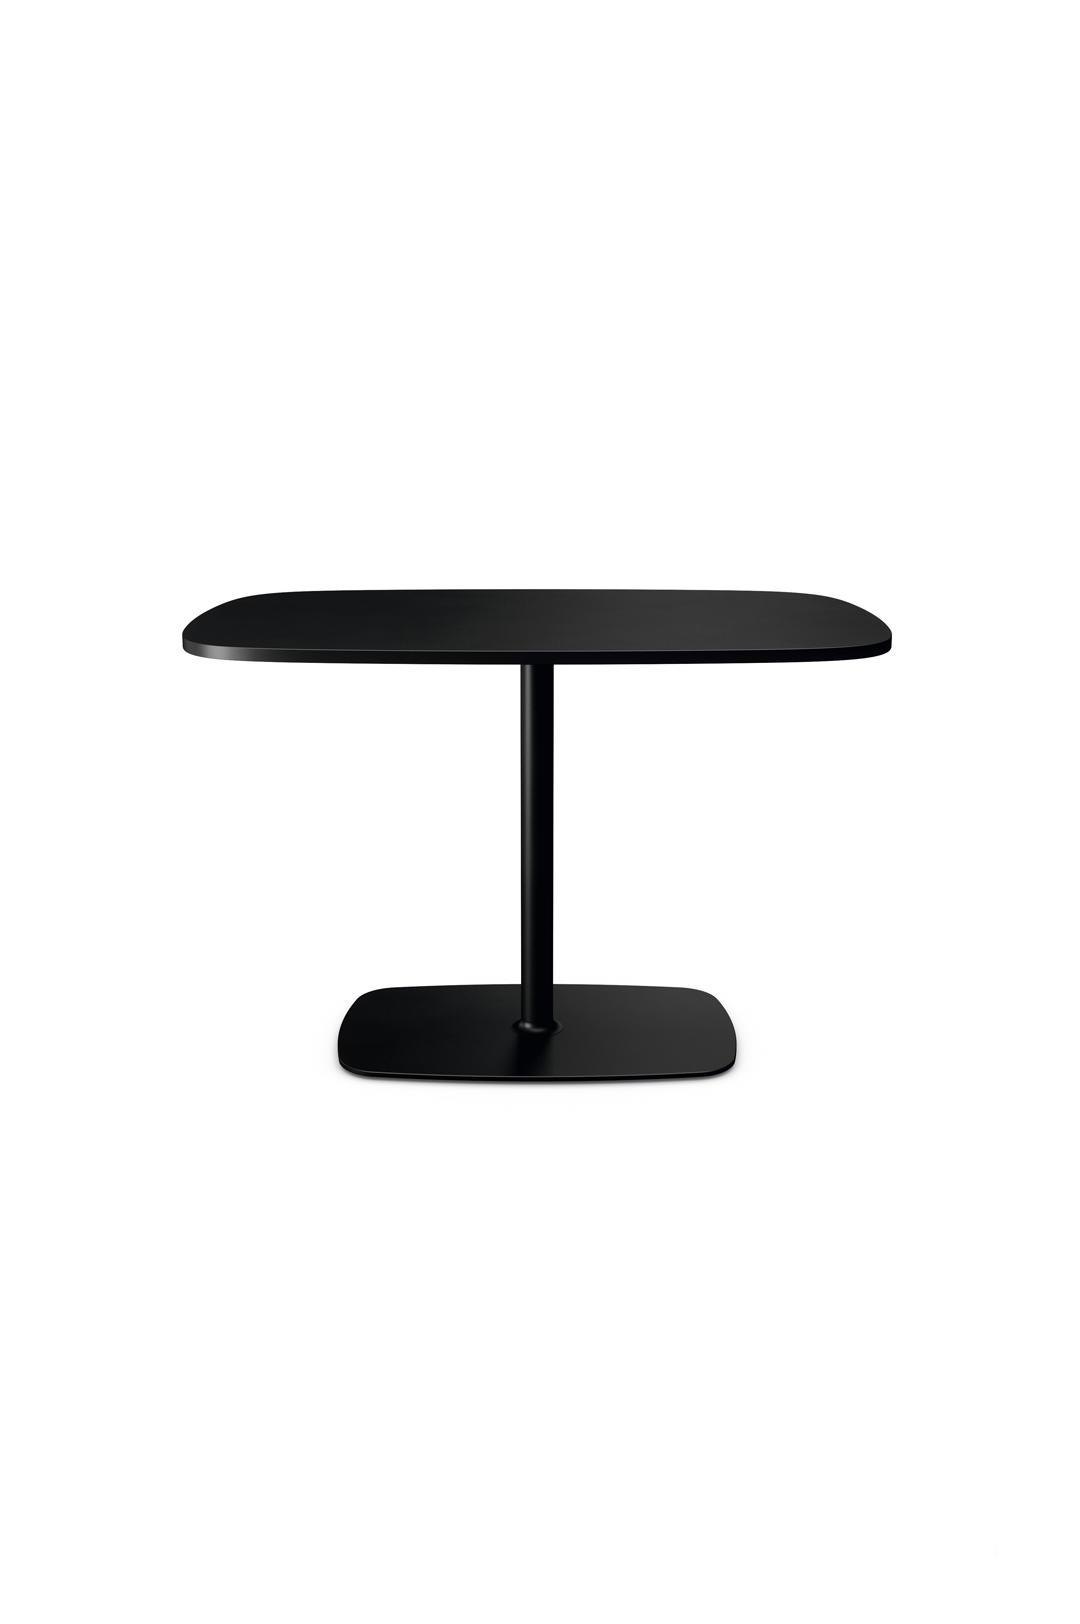 Столик Lox Side Table от Walter Knoll — Фотография 1